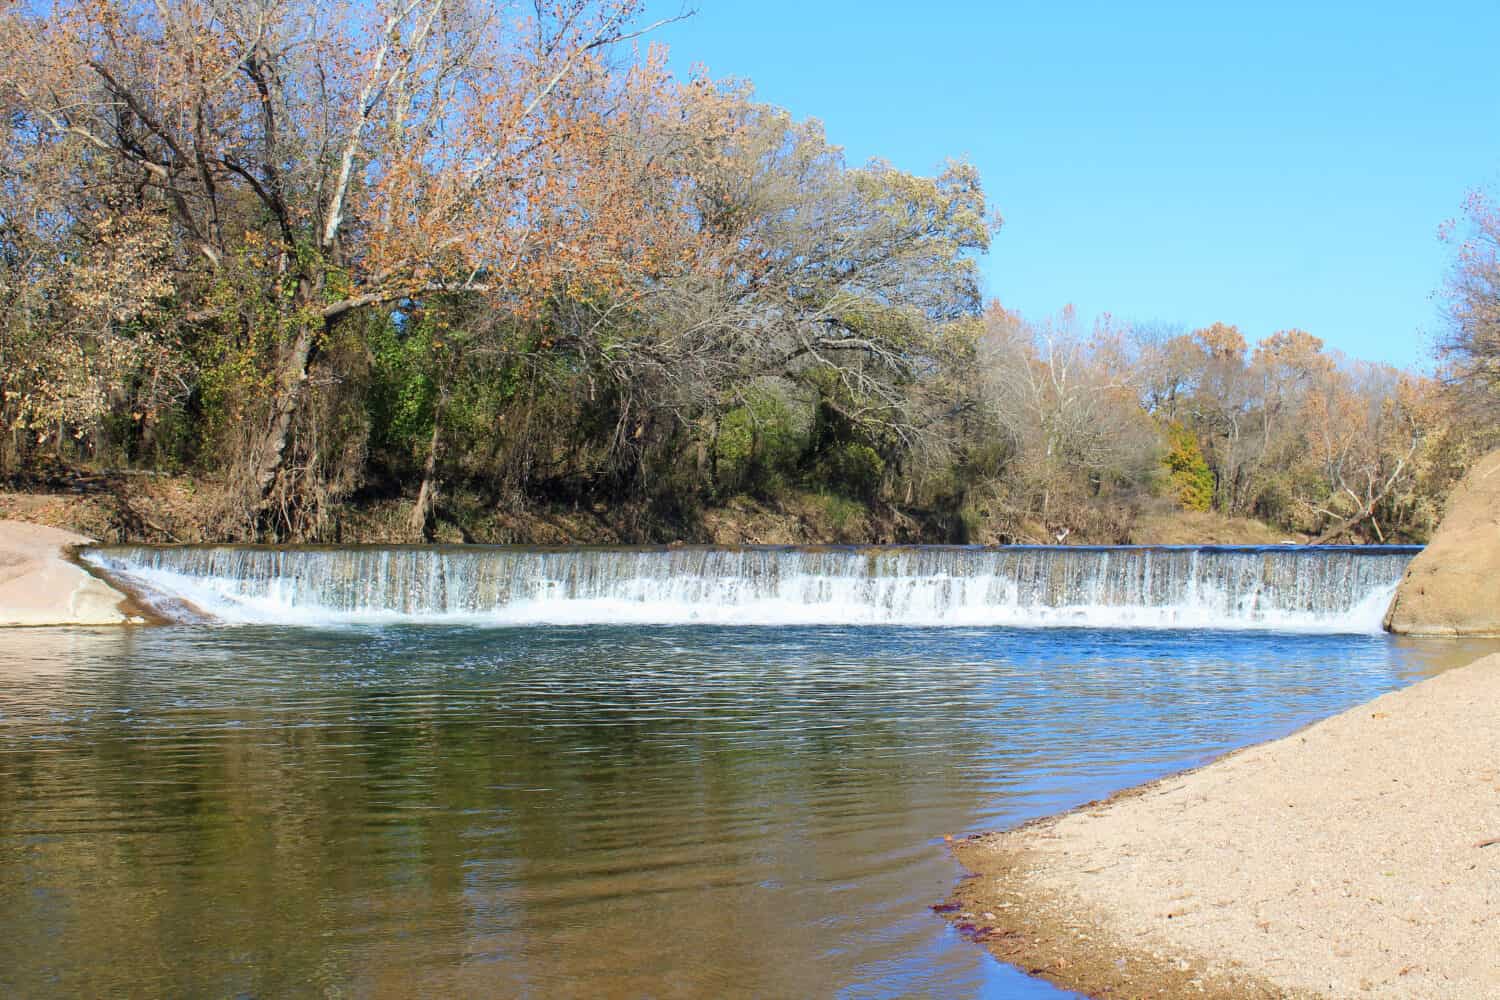 The Old Dam on Pennington Creek in Tishomingo, Oklahoma.